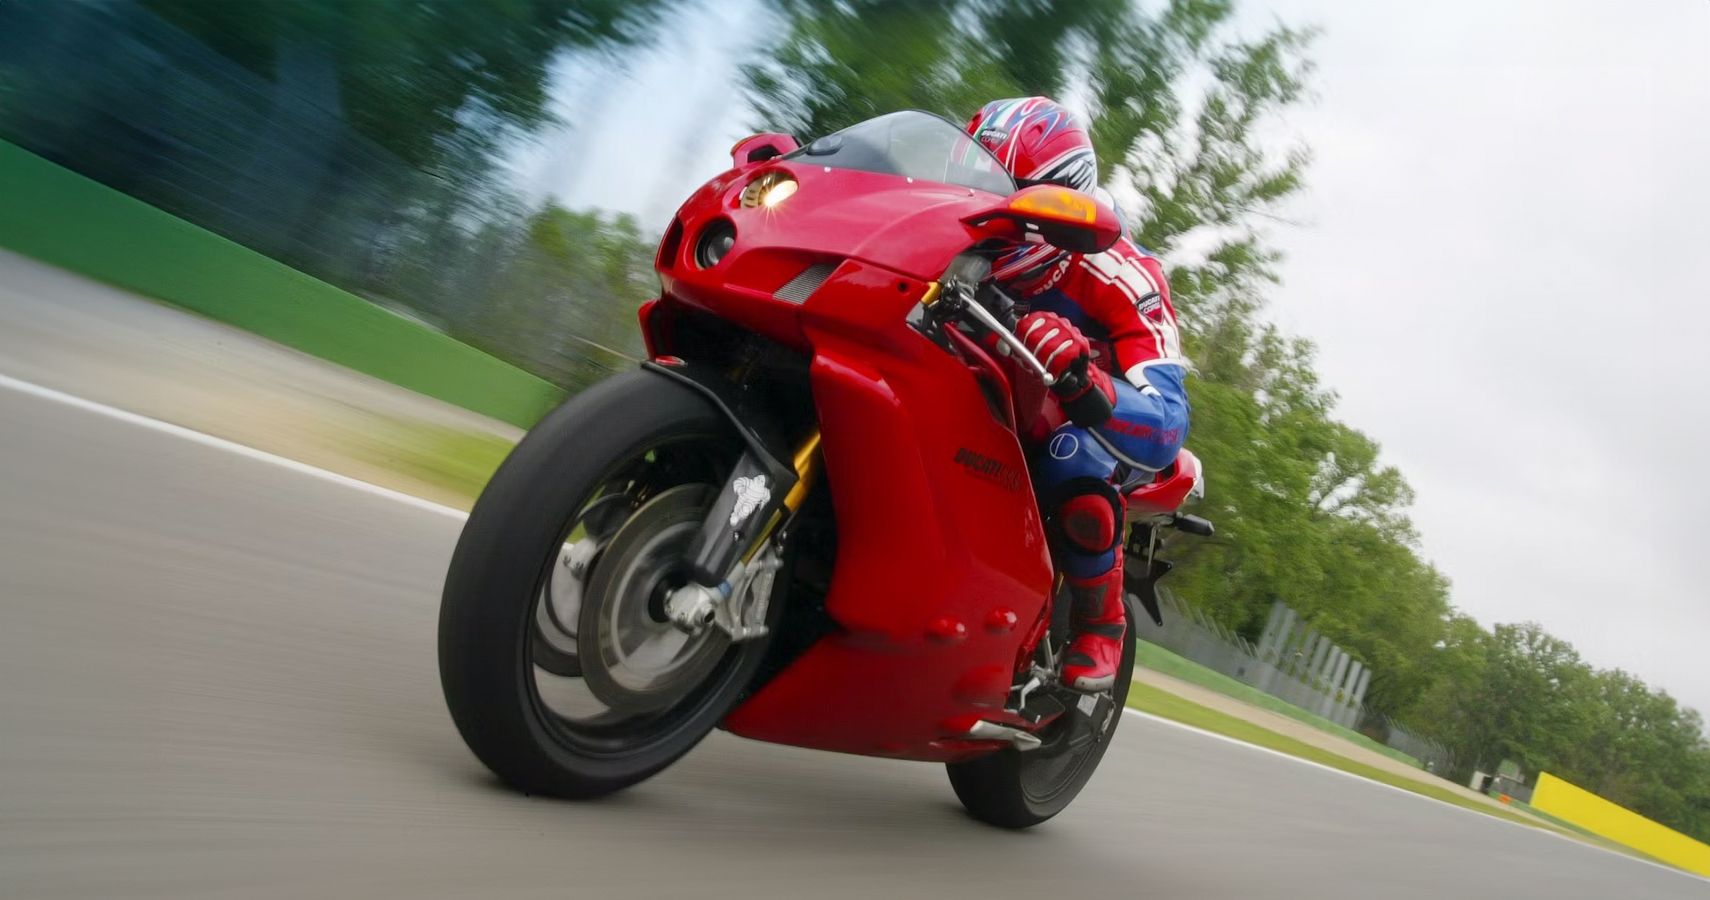 Red Italian superbike on track